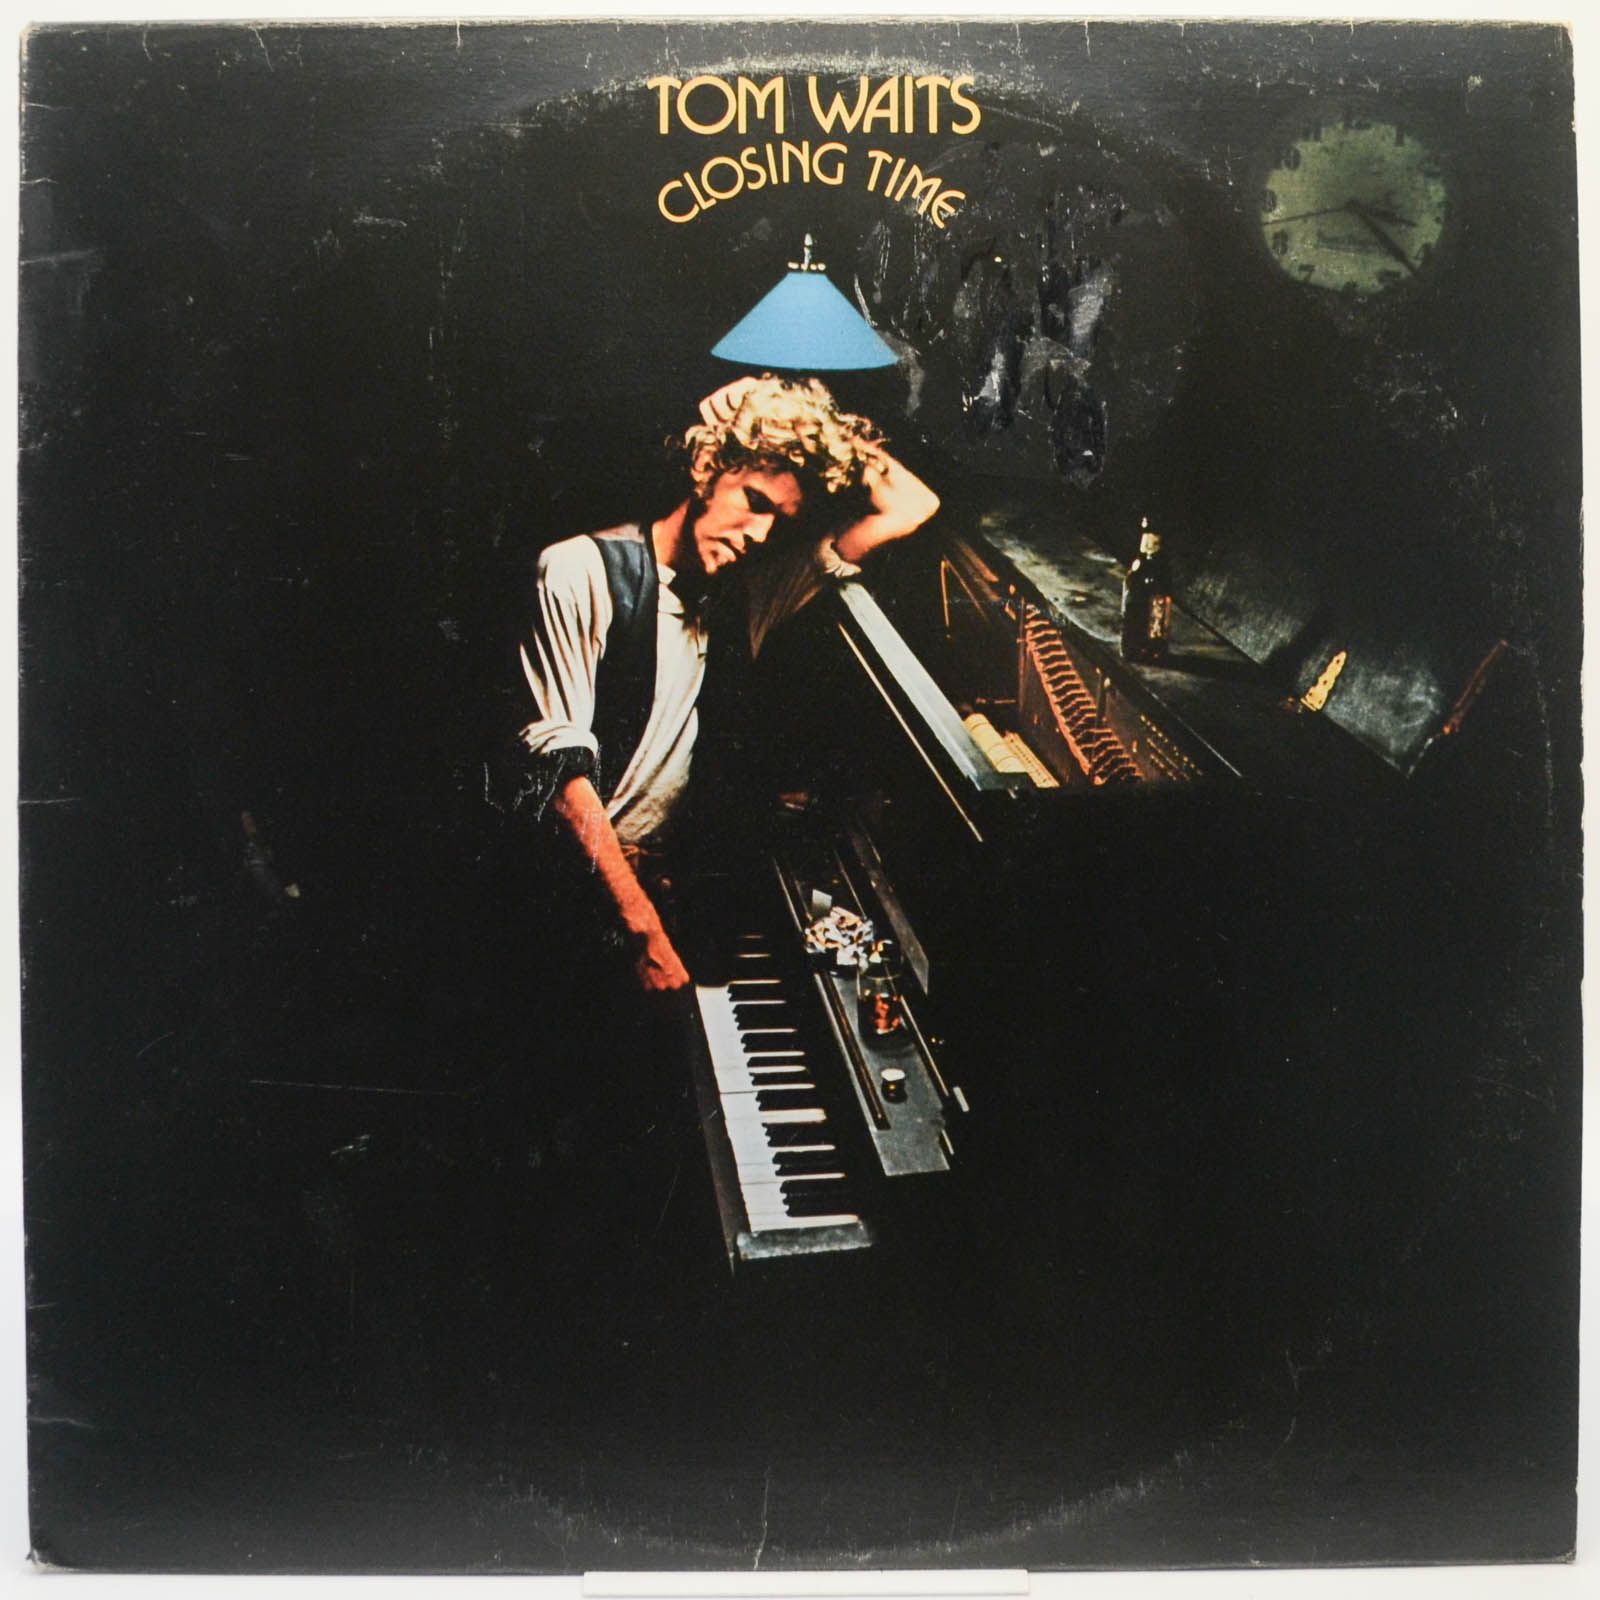 Tom Waits — Closing Time, 1973